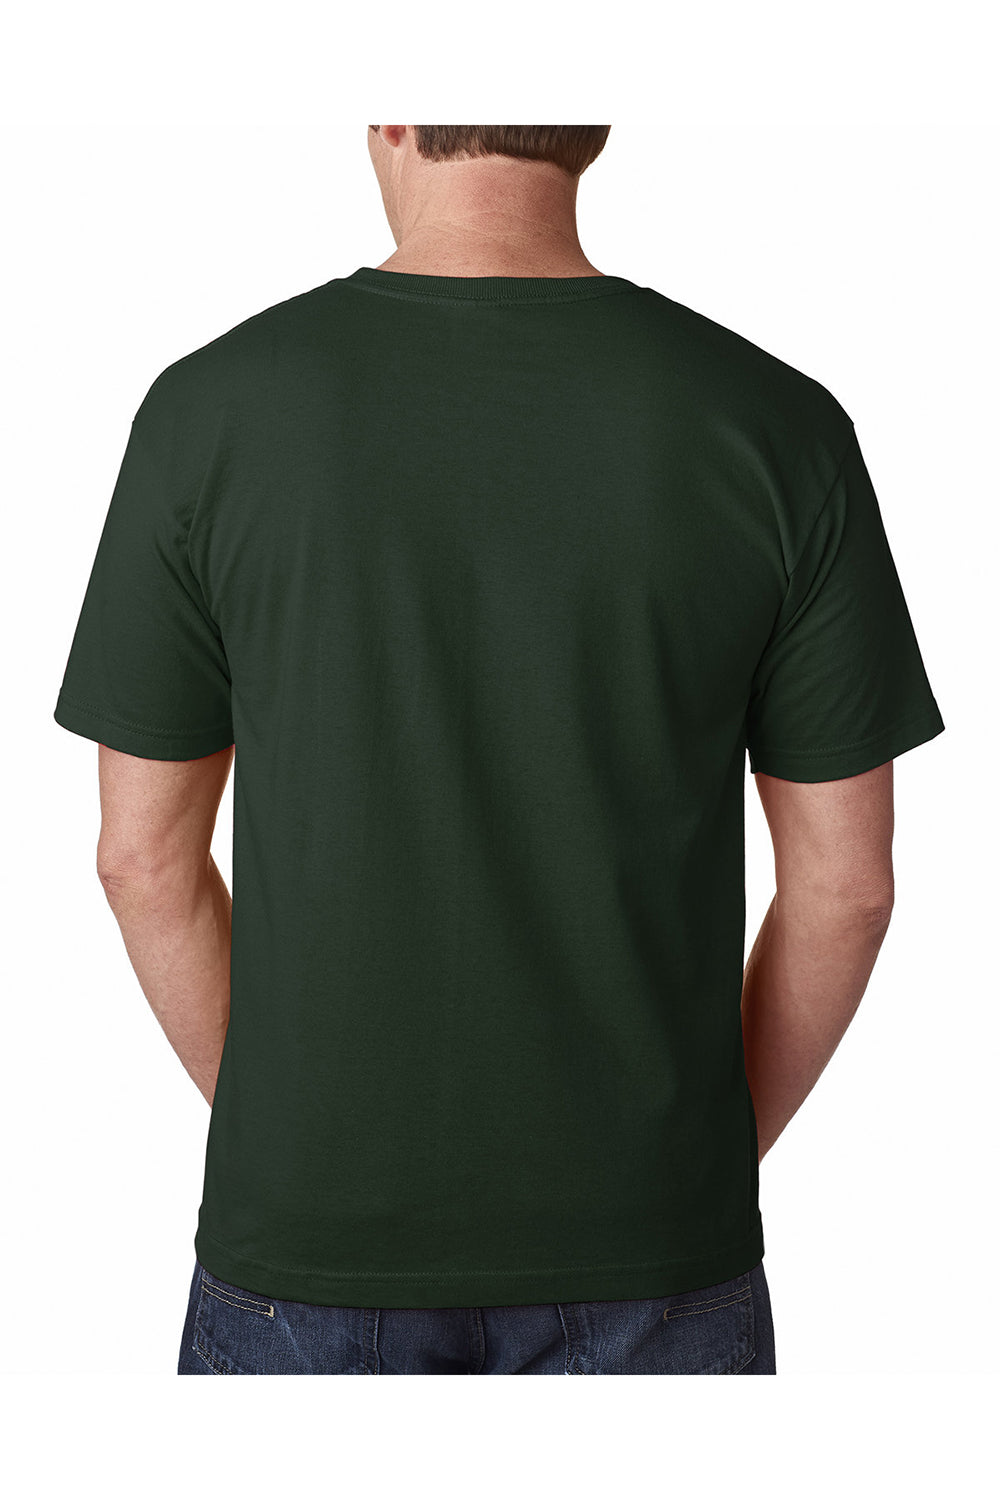 Bayside BA5040 Mens USA Made Short Sleeve Crewneck T-Shirt Hunter Green Model Back